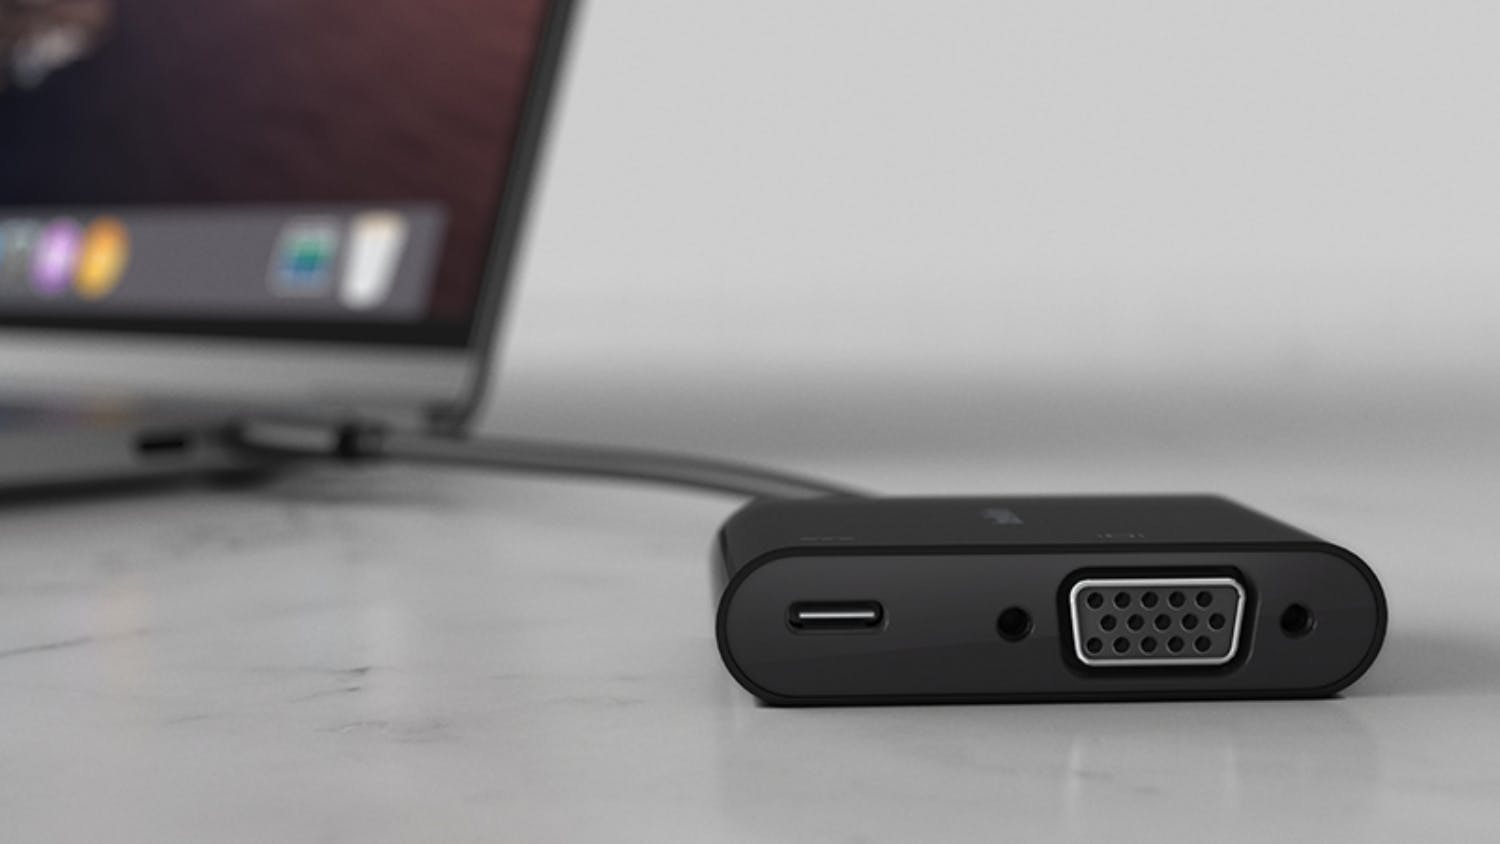 Belkin USB-C to VGA + Charge Adapter - Black